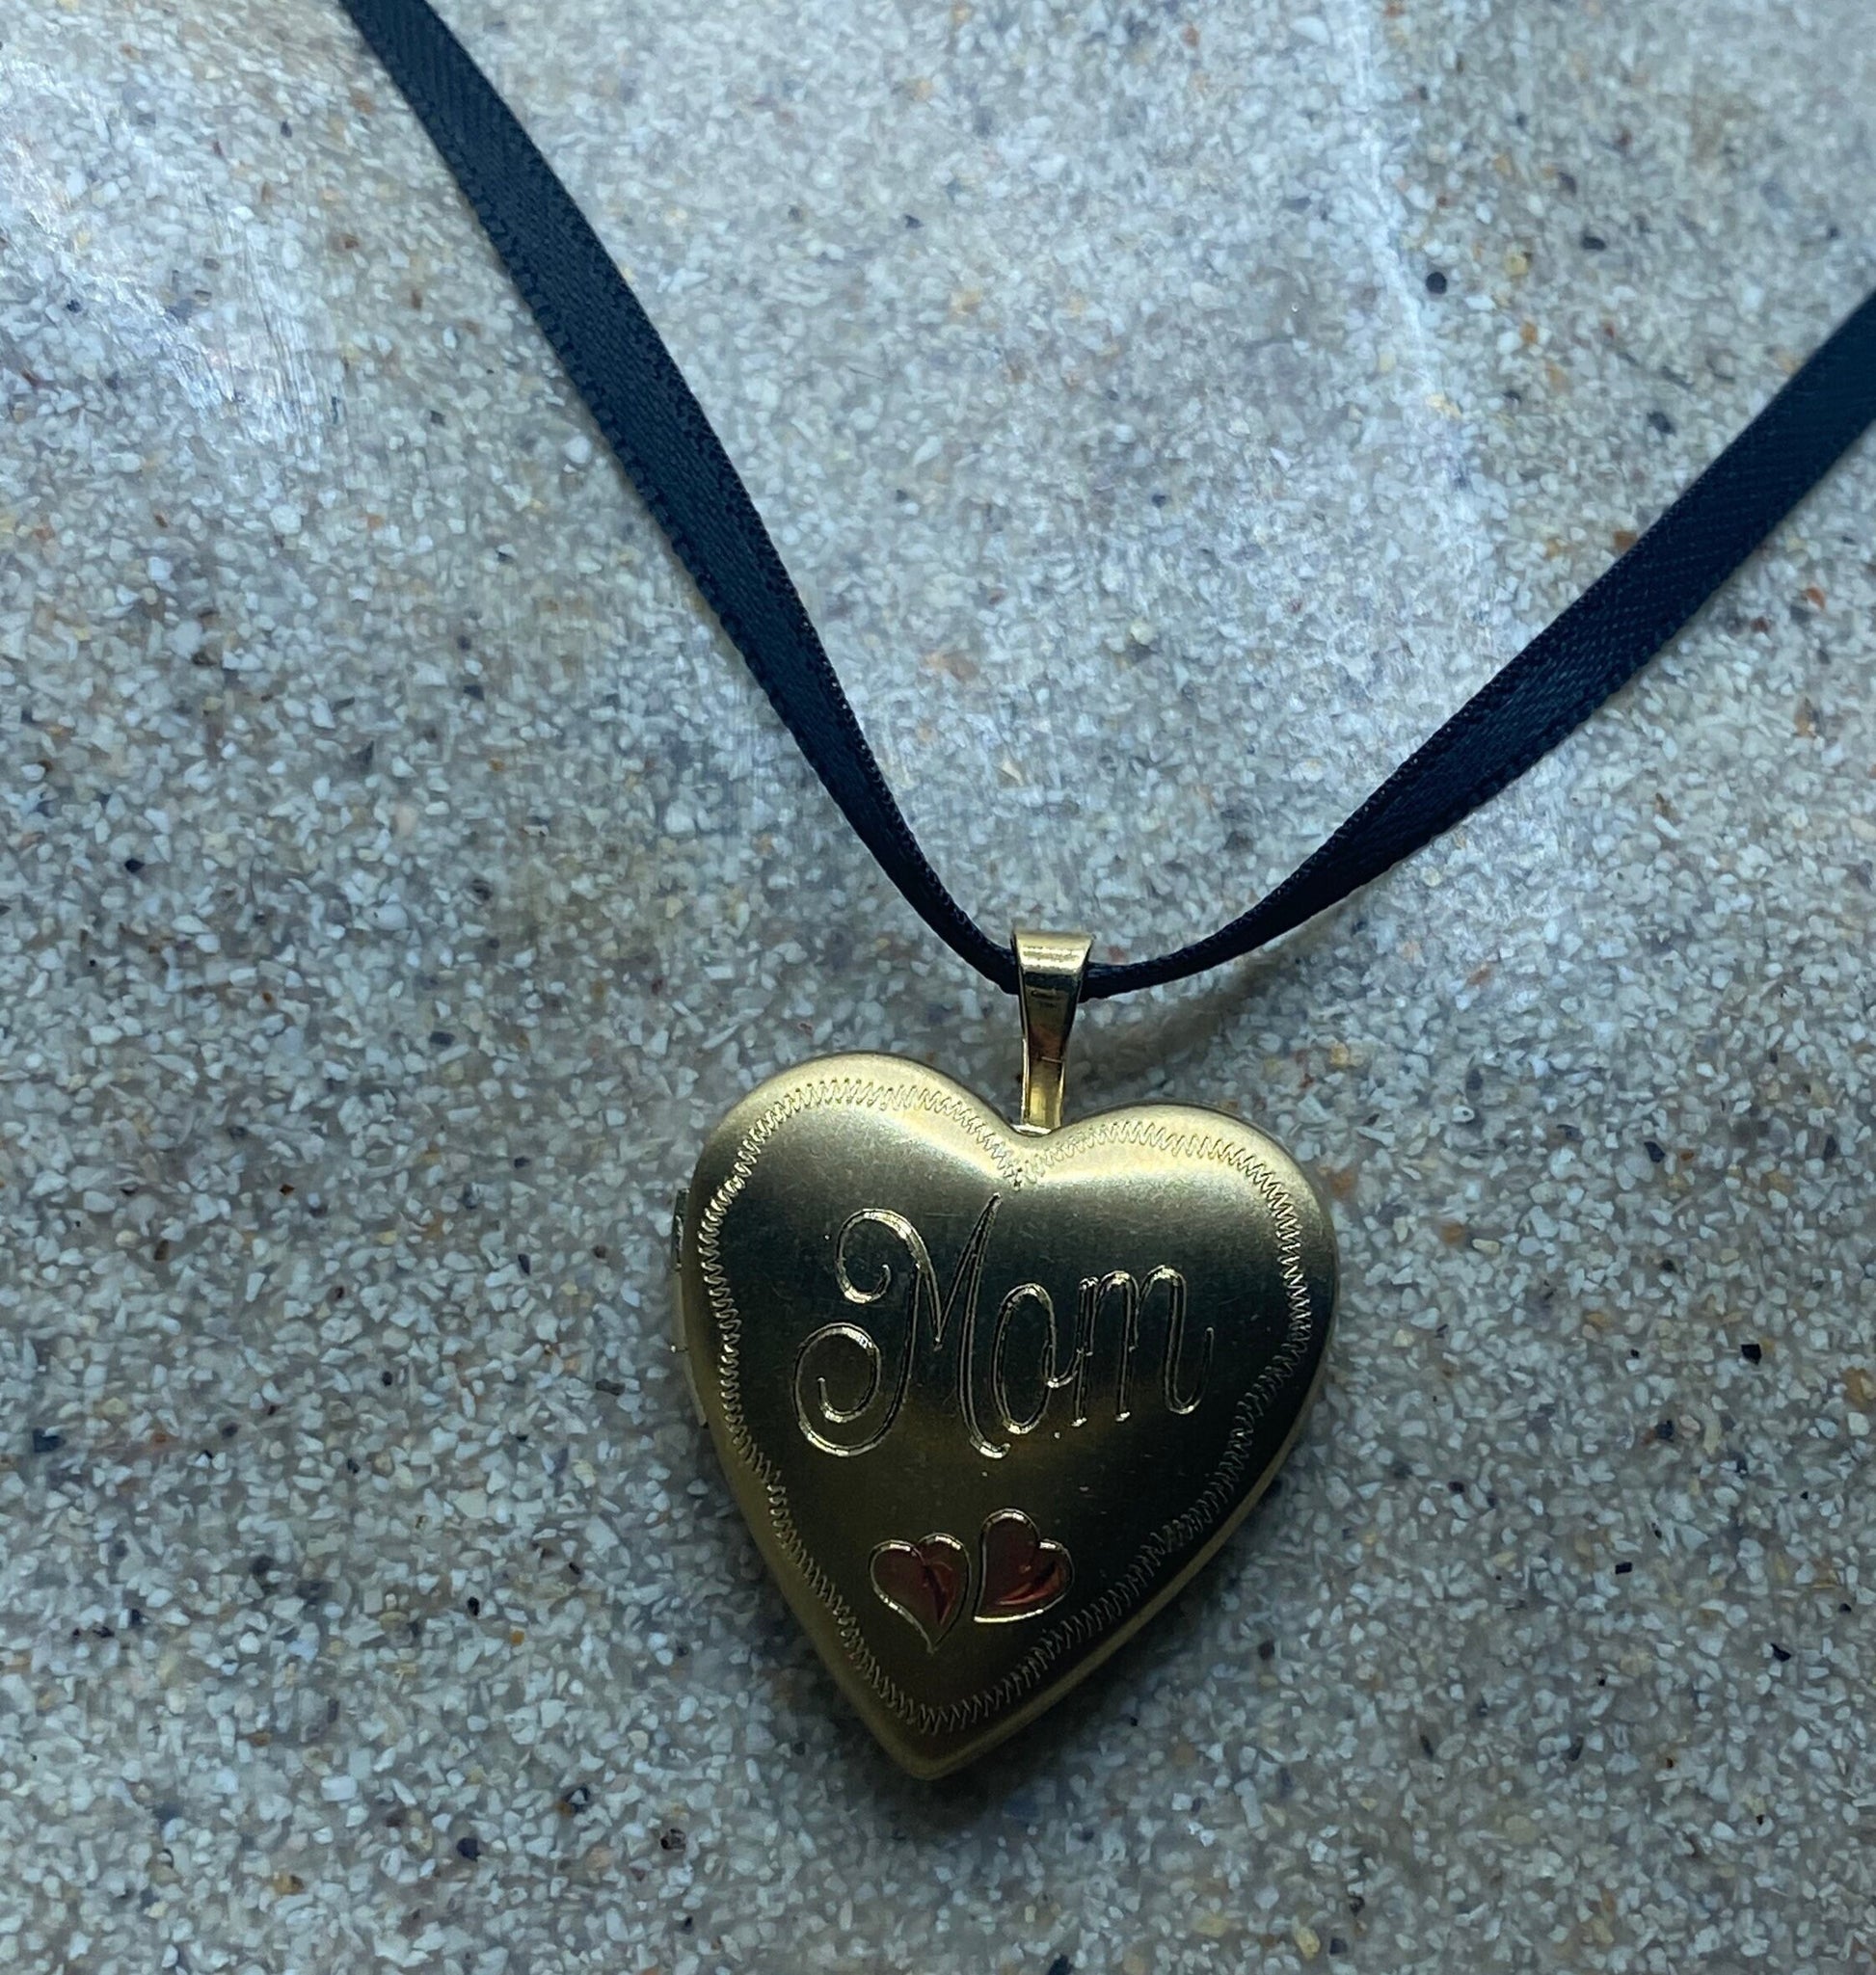 Vintage Gold Locket | Tiny Heart 9k Gold Filled Pendant Photo Memory Charm Engraved "Mom" Hearts | Choker Necklace